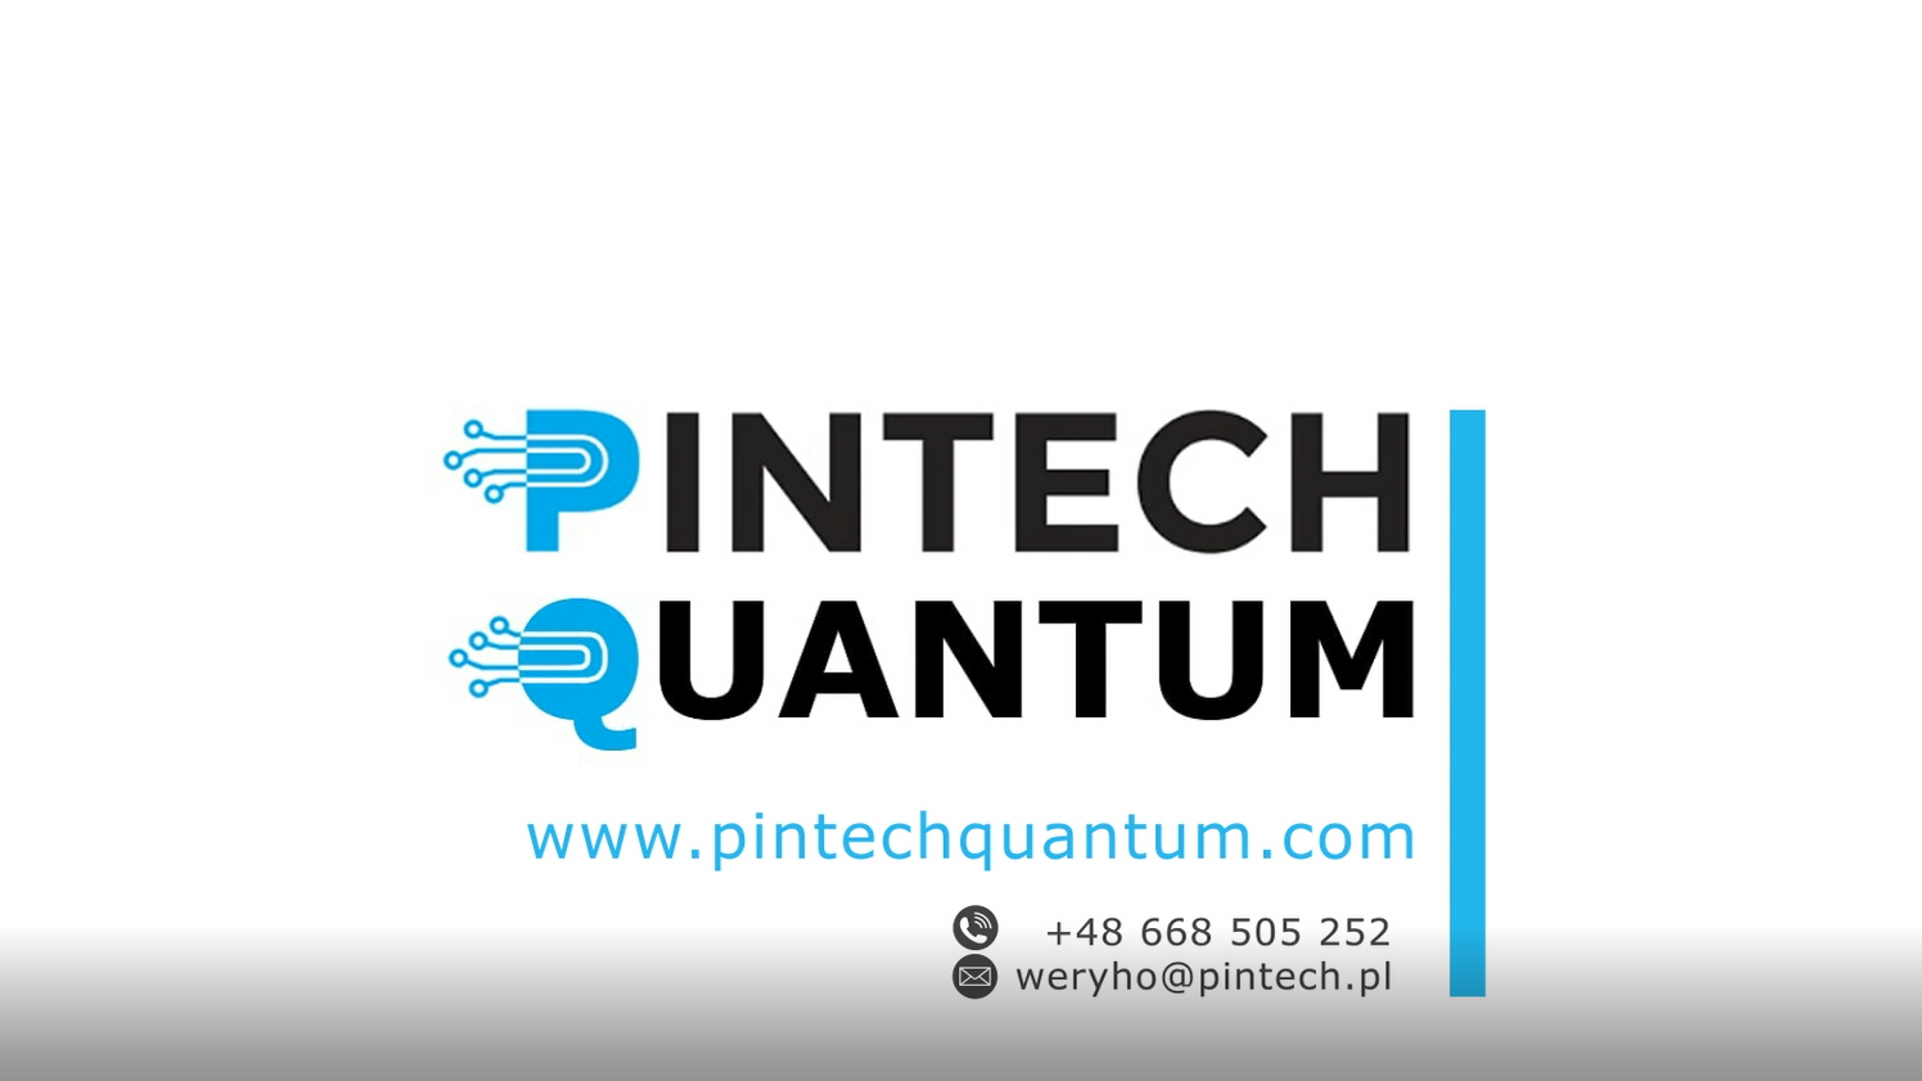 What's Pintech Quantum?